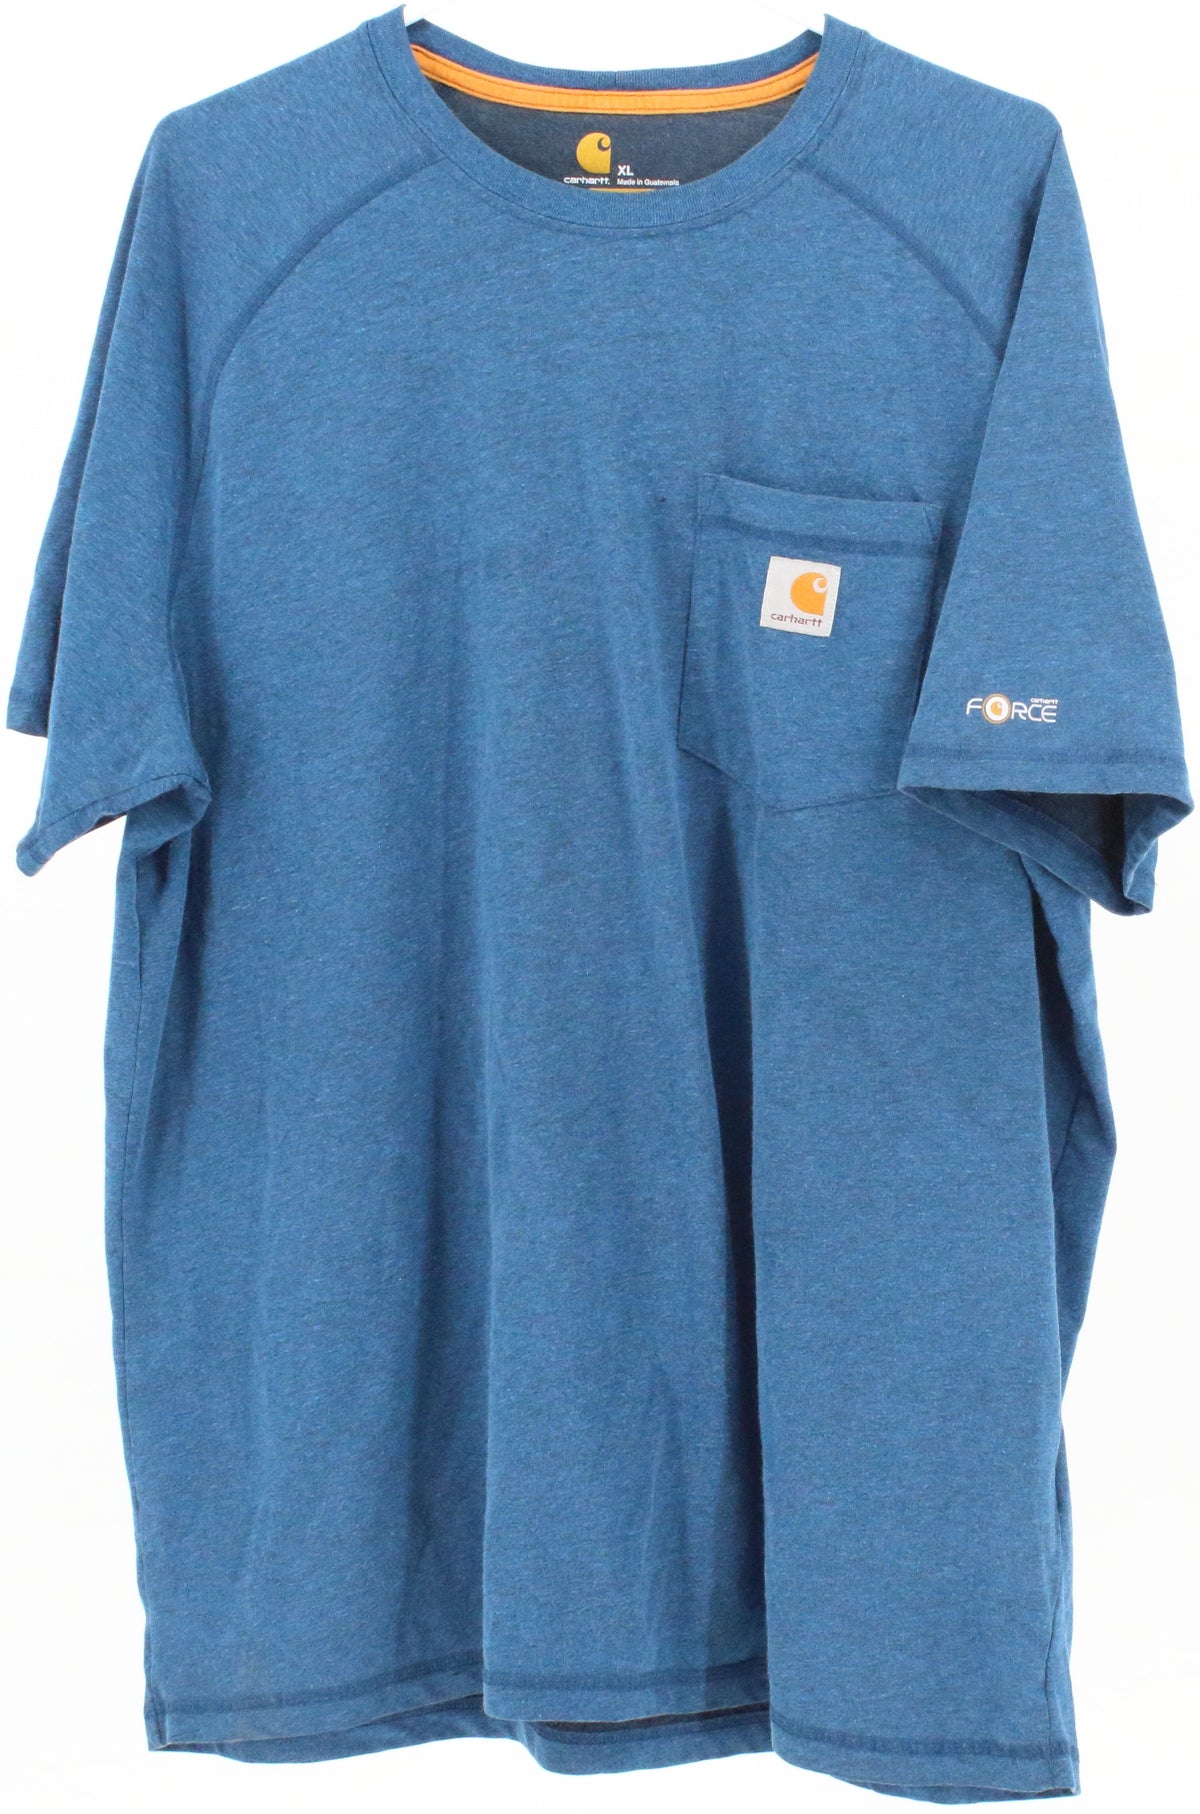 Carhartt Force Relaxed Fit Blue Melange Front Pocket T-Shirt